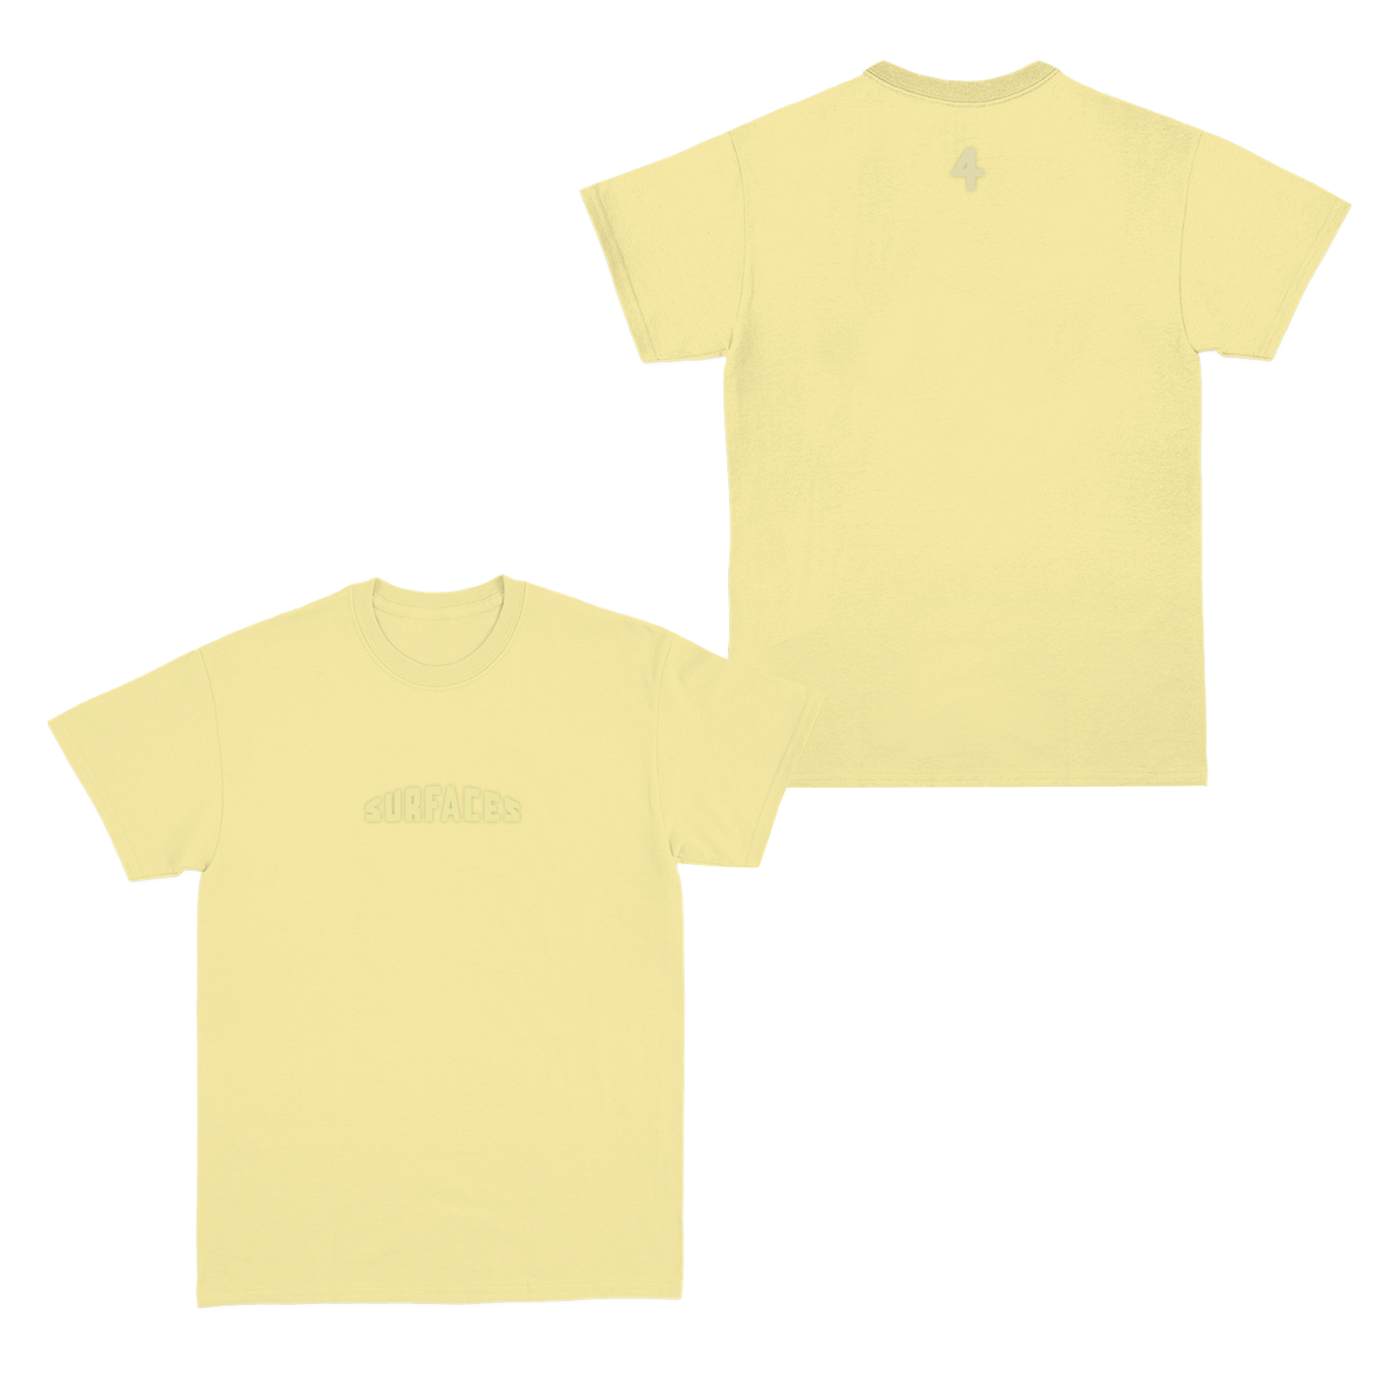 Surfaces So Far Away Yellow T-Shirt